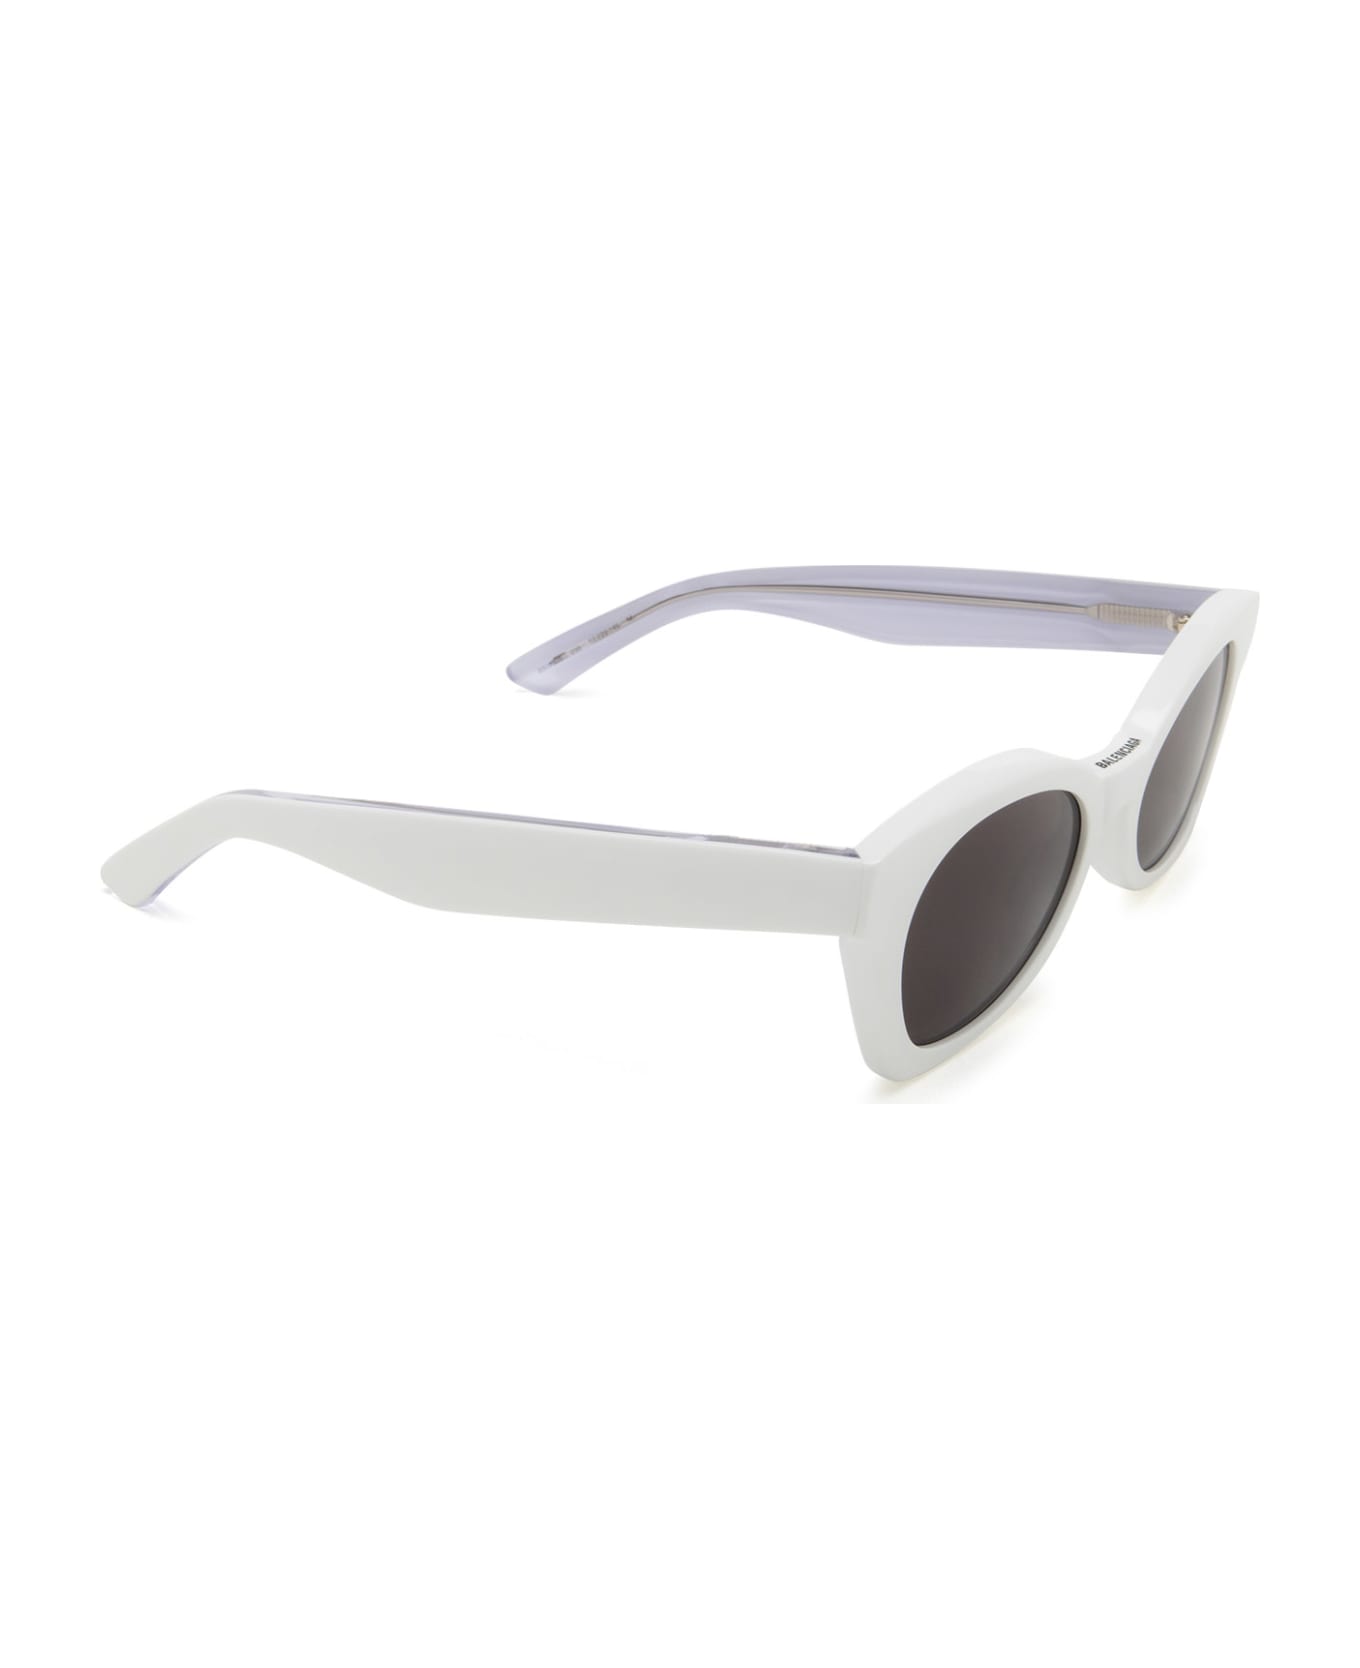 Balenciaga Eyewear Bb0230s Sunglasses - White サングラス